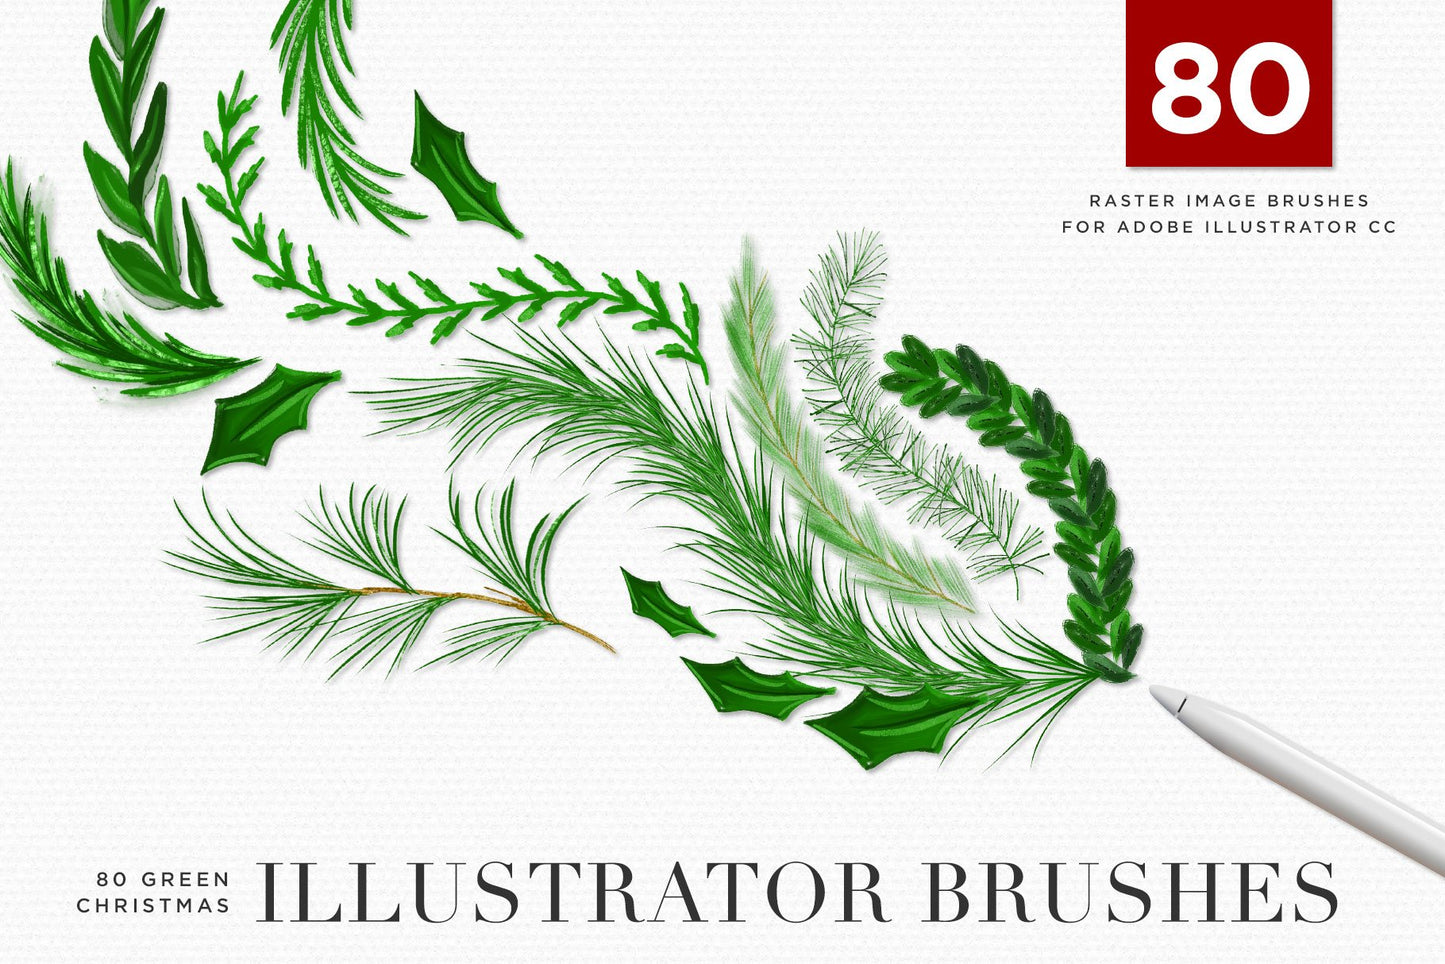 Christmas & Winter Greenery Illustrated Brushes for Adobe Illustrator cover image